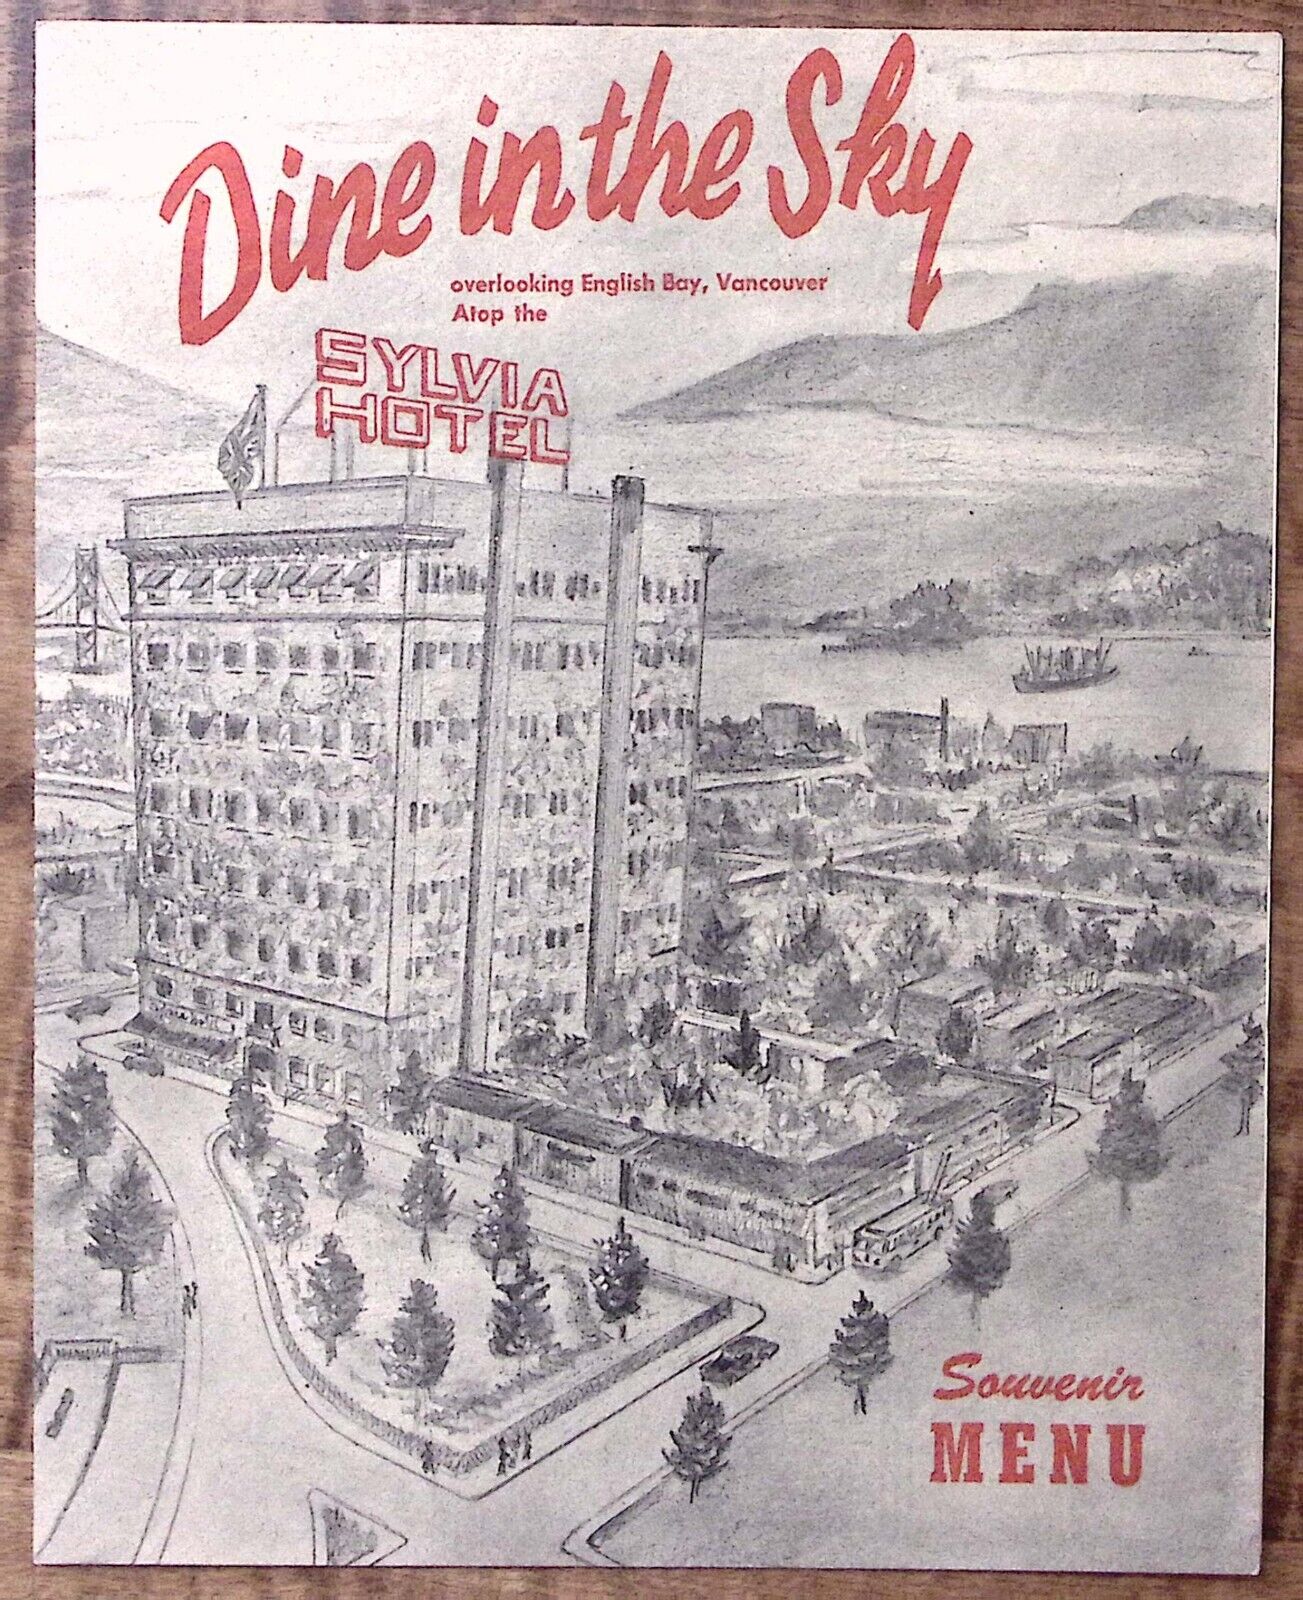 1940s SYLVIA HOTEL ENGLISH BAY VANCOUVER B.C SOUVENIR MENU DINE IN THE SKY Z3637